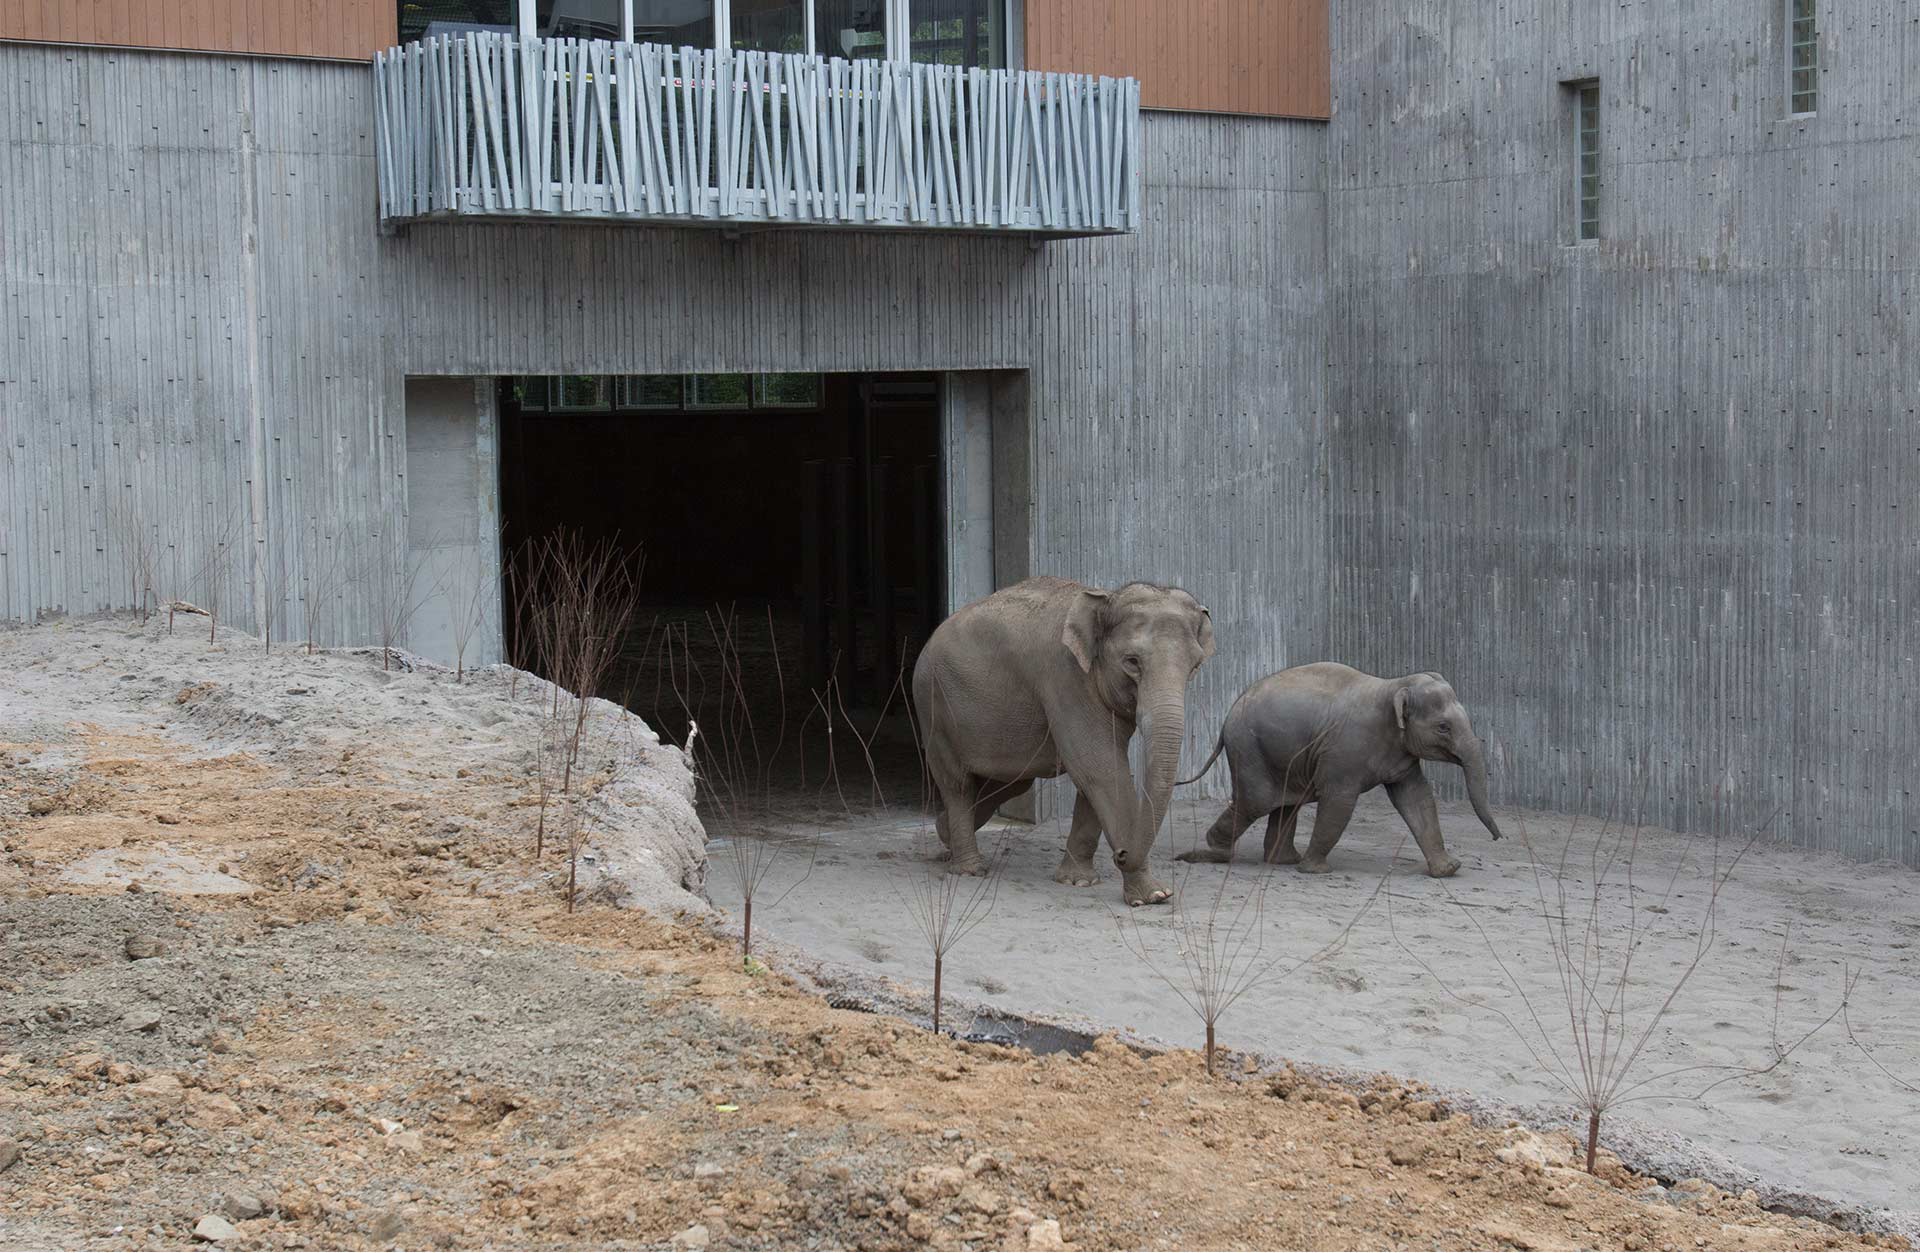 Oregon Zoo Elephant Lands